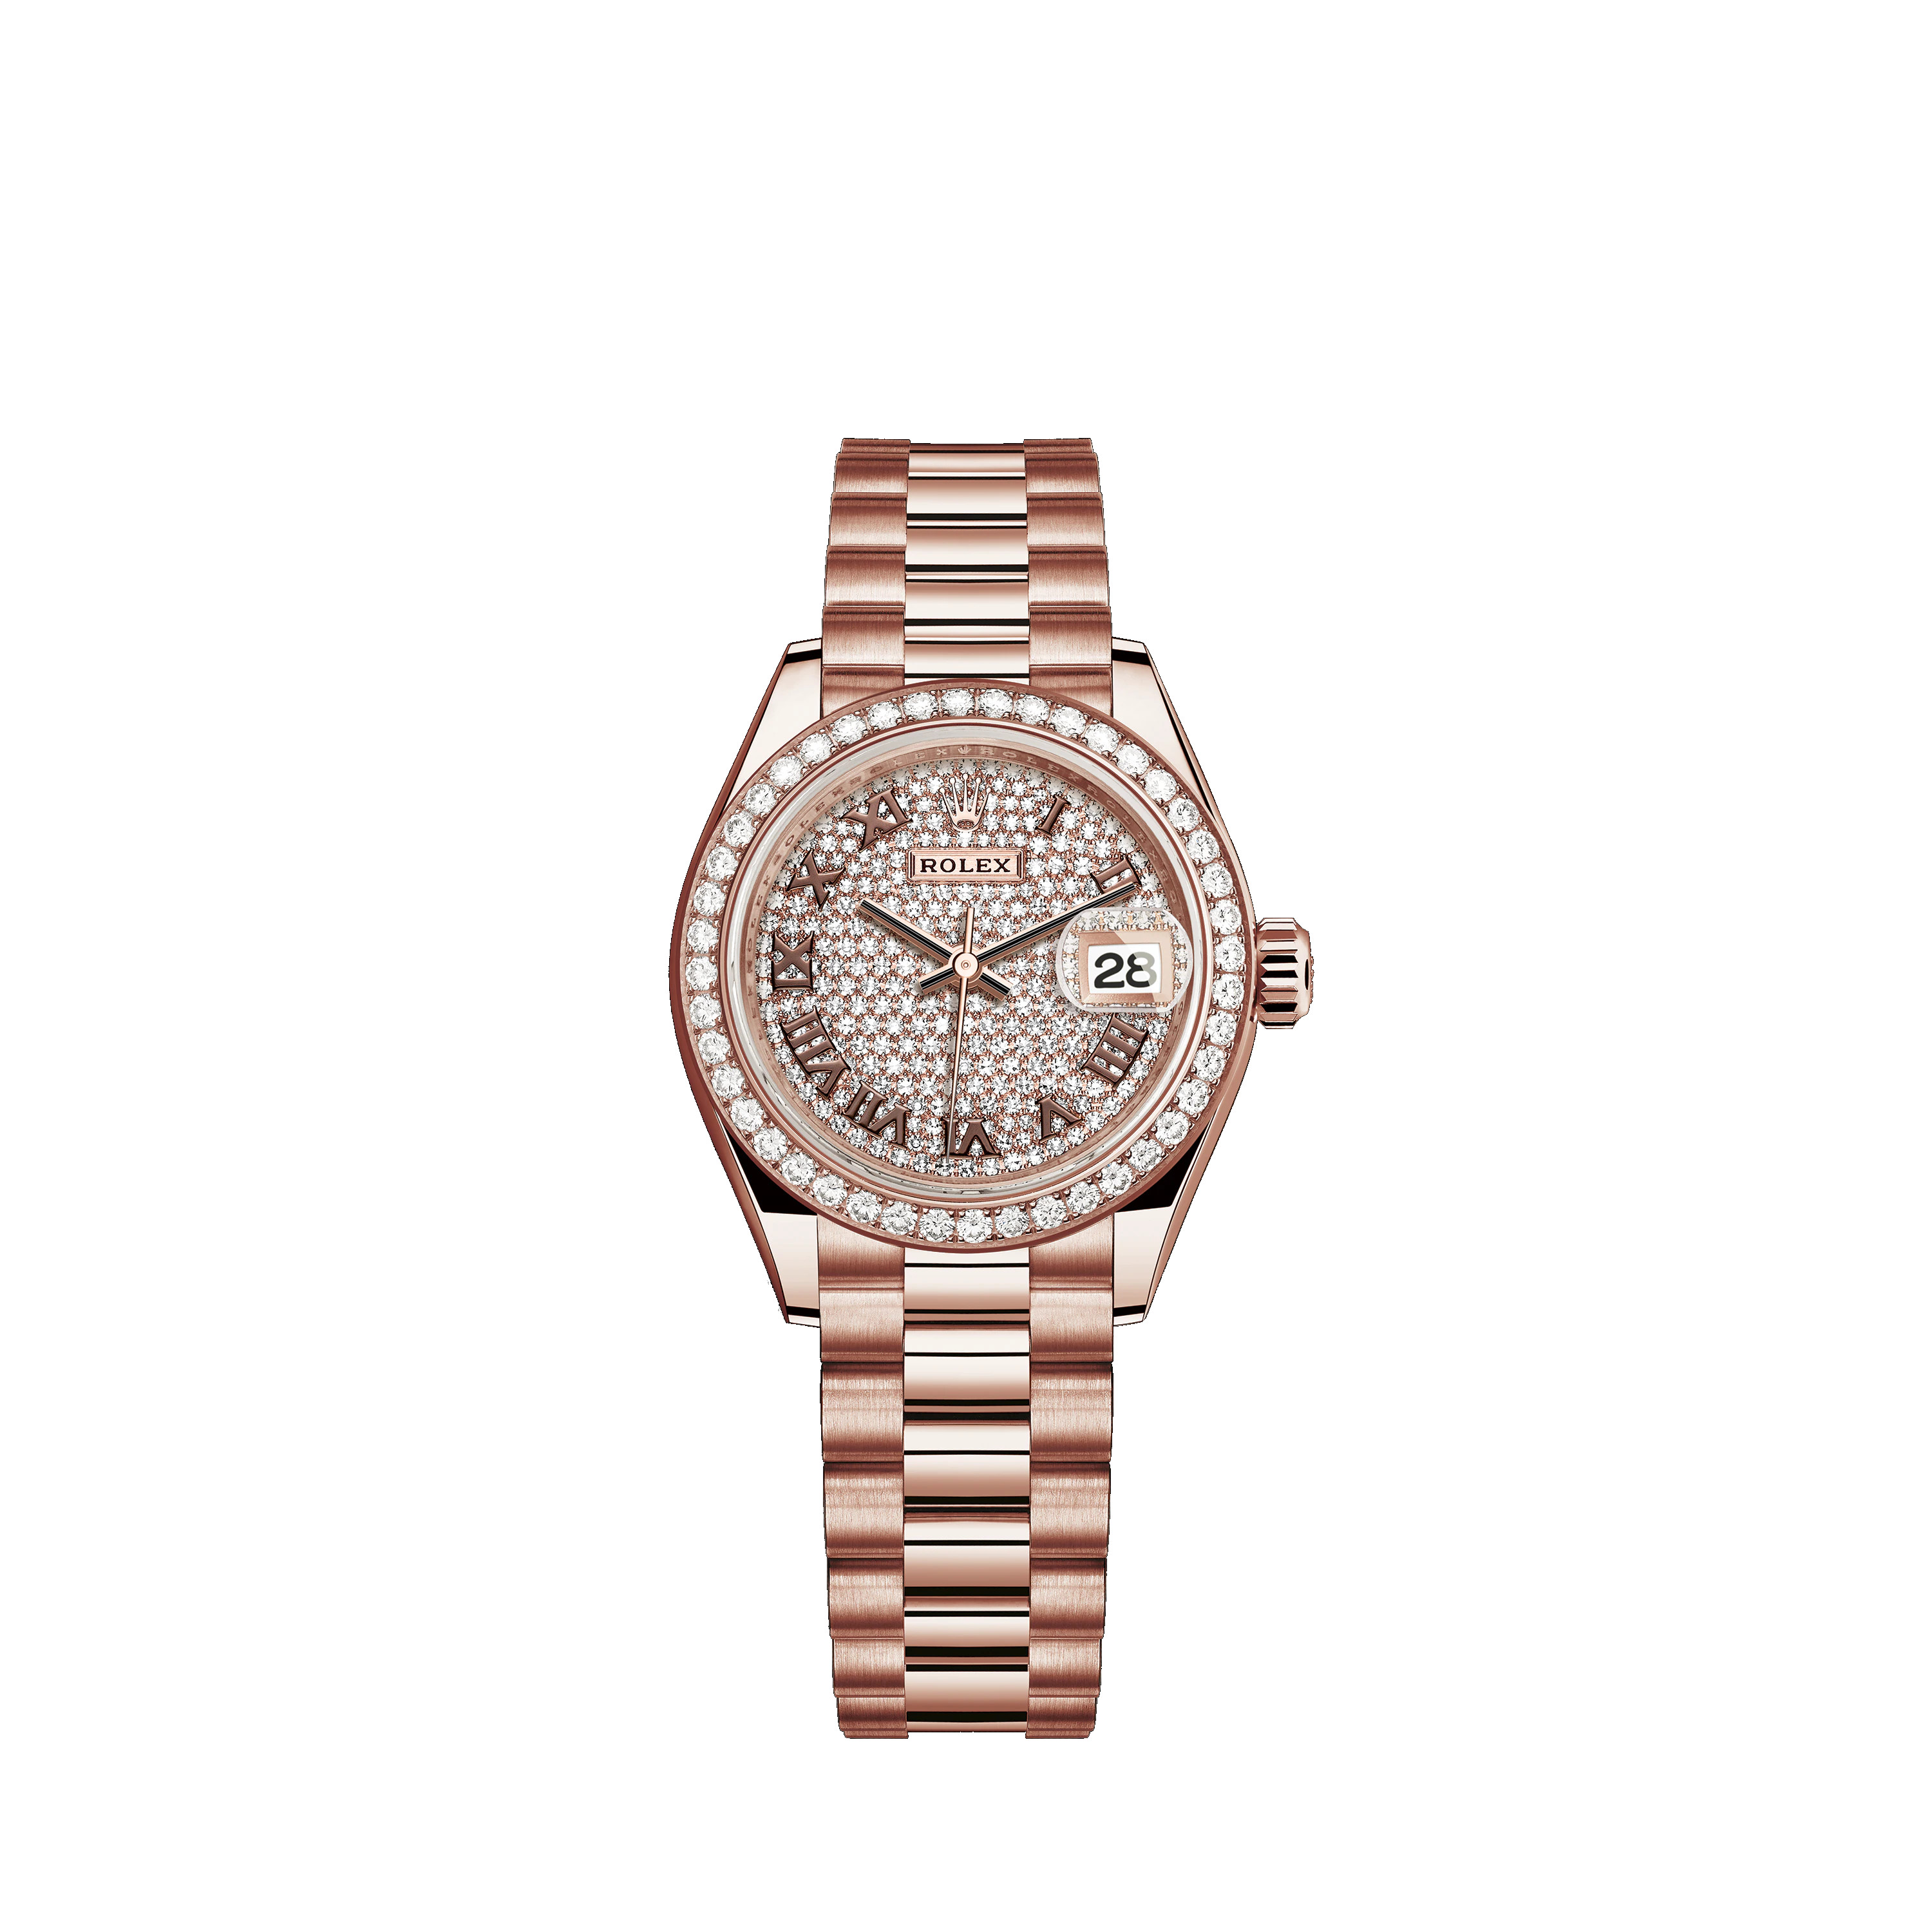 Lady-Datejust 28 279135RBR Rose Gold & Diamonds Watch (Diamond-Paved)